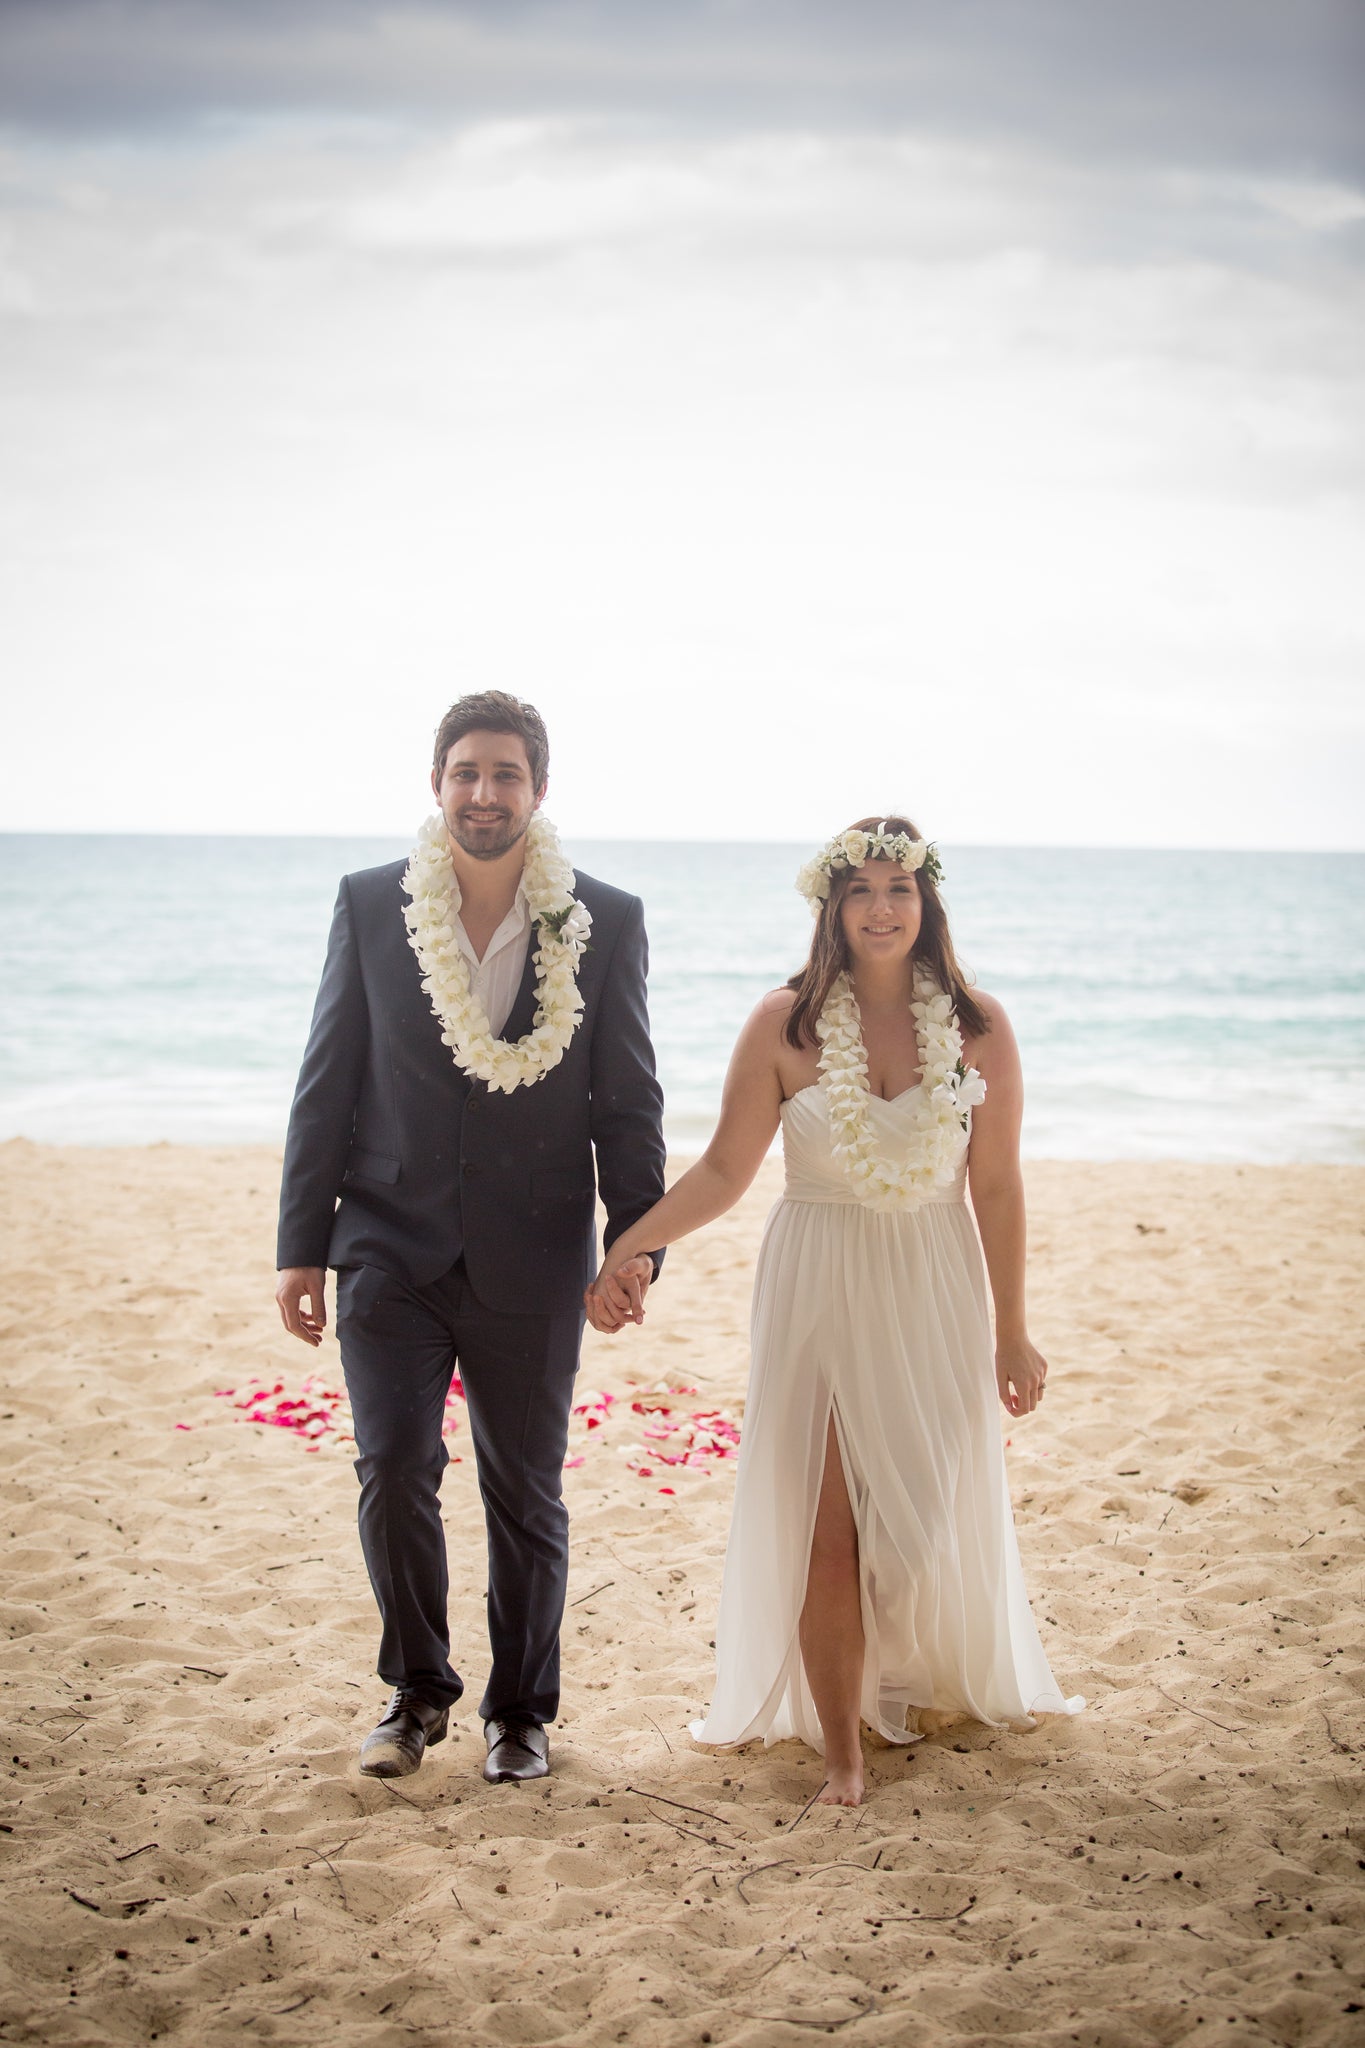 New Husband and Wife walk along the beach